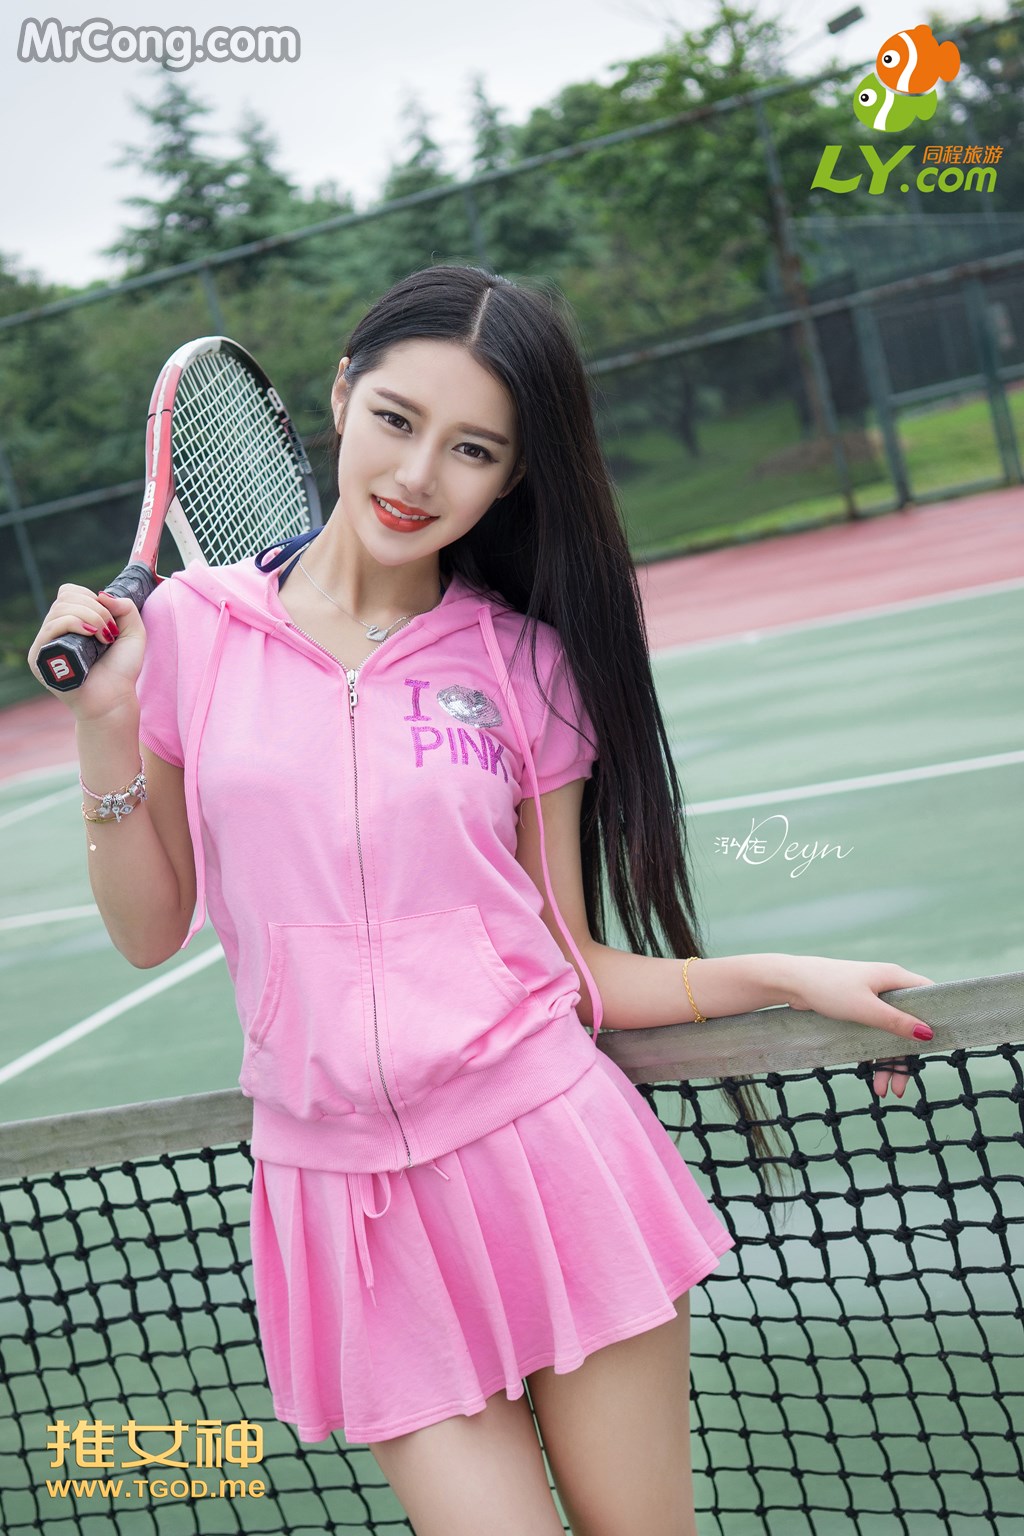 TGOD 2014-09-24: Model Xu Yan Xin (徐妍馨) (66 pictures) photo 1-18